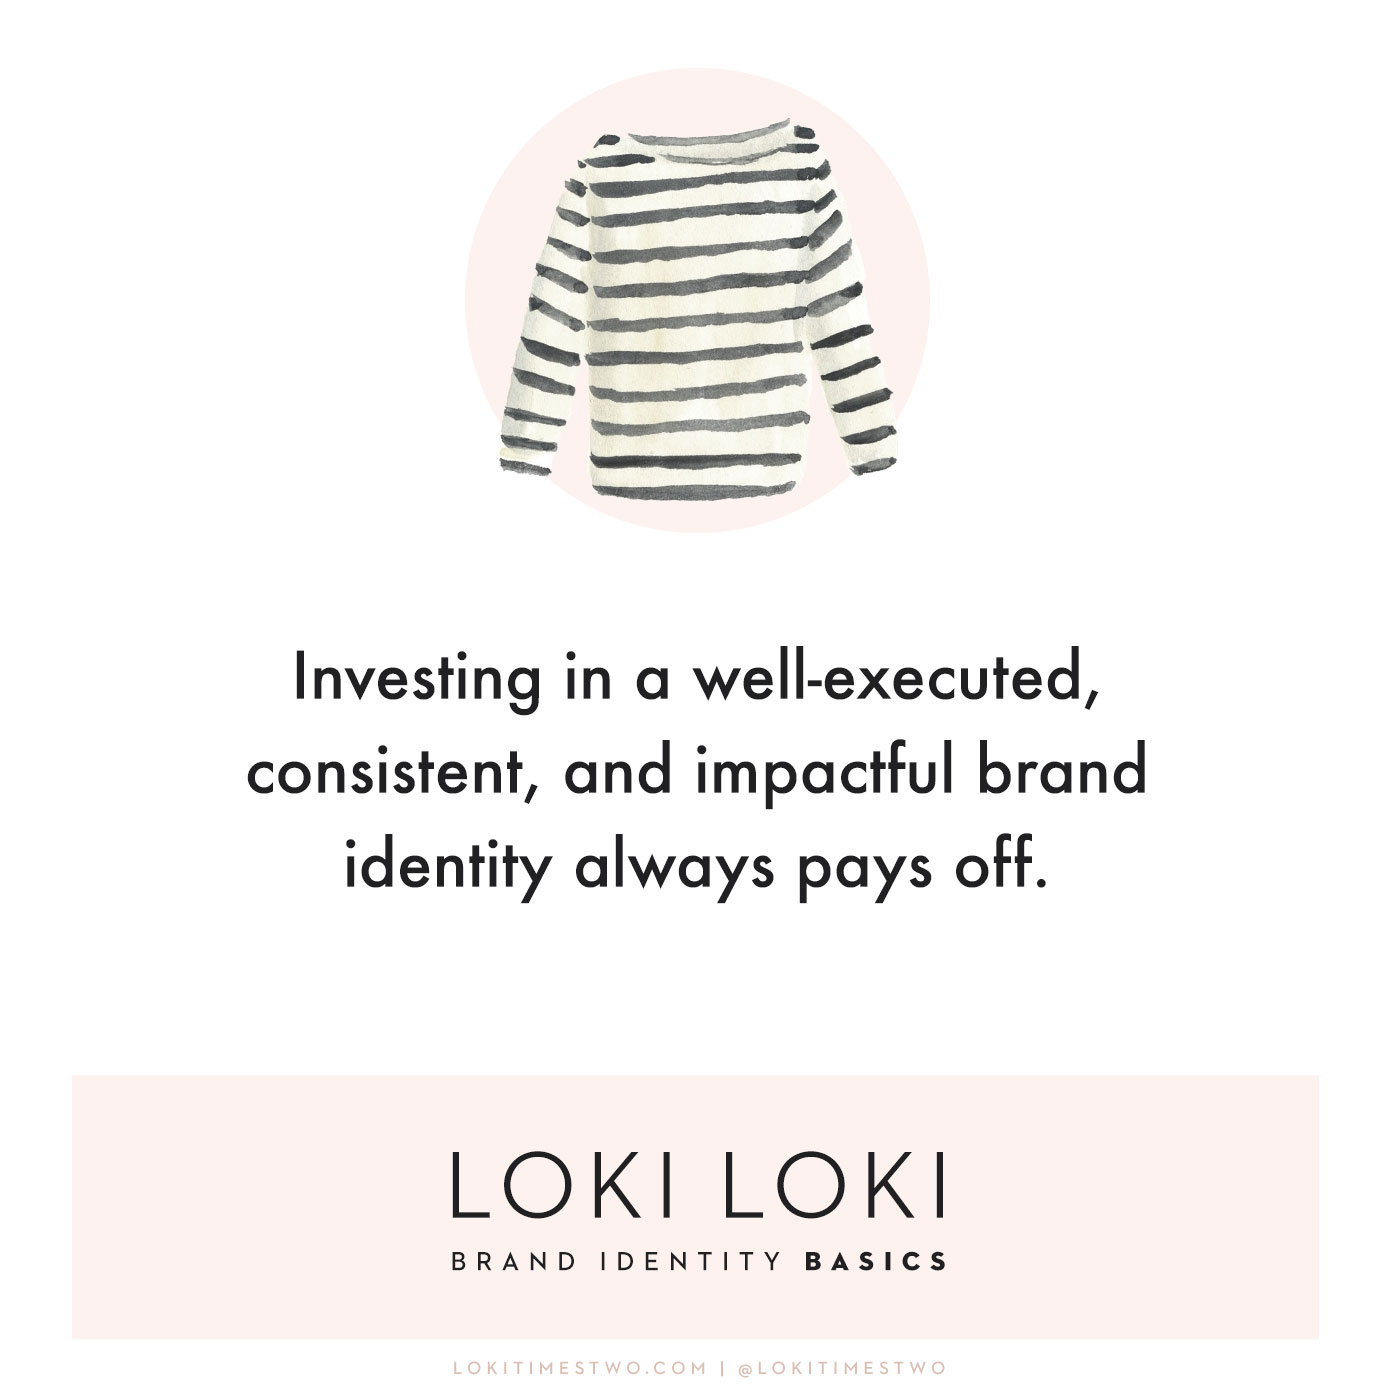 Loki Loki Brand Identity Basic: The Striped Shirt